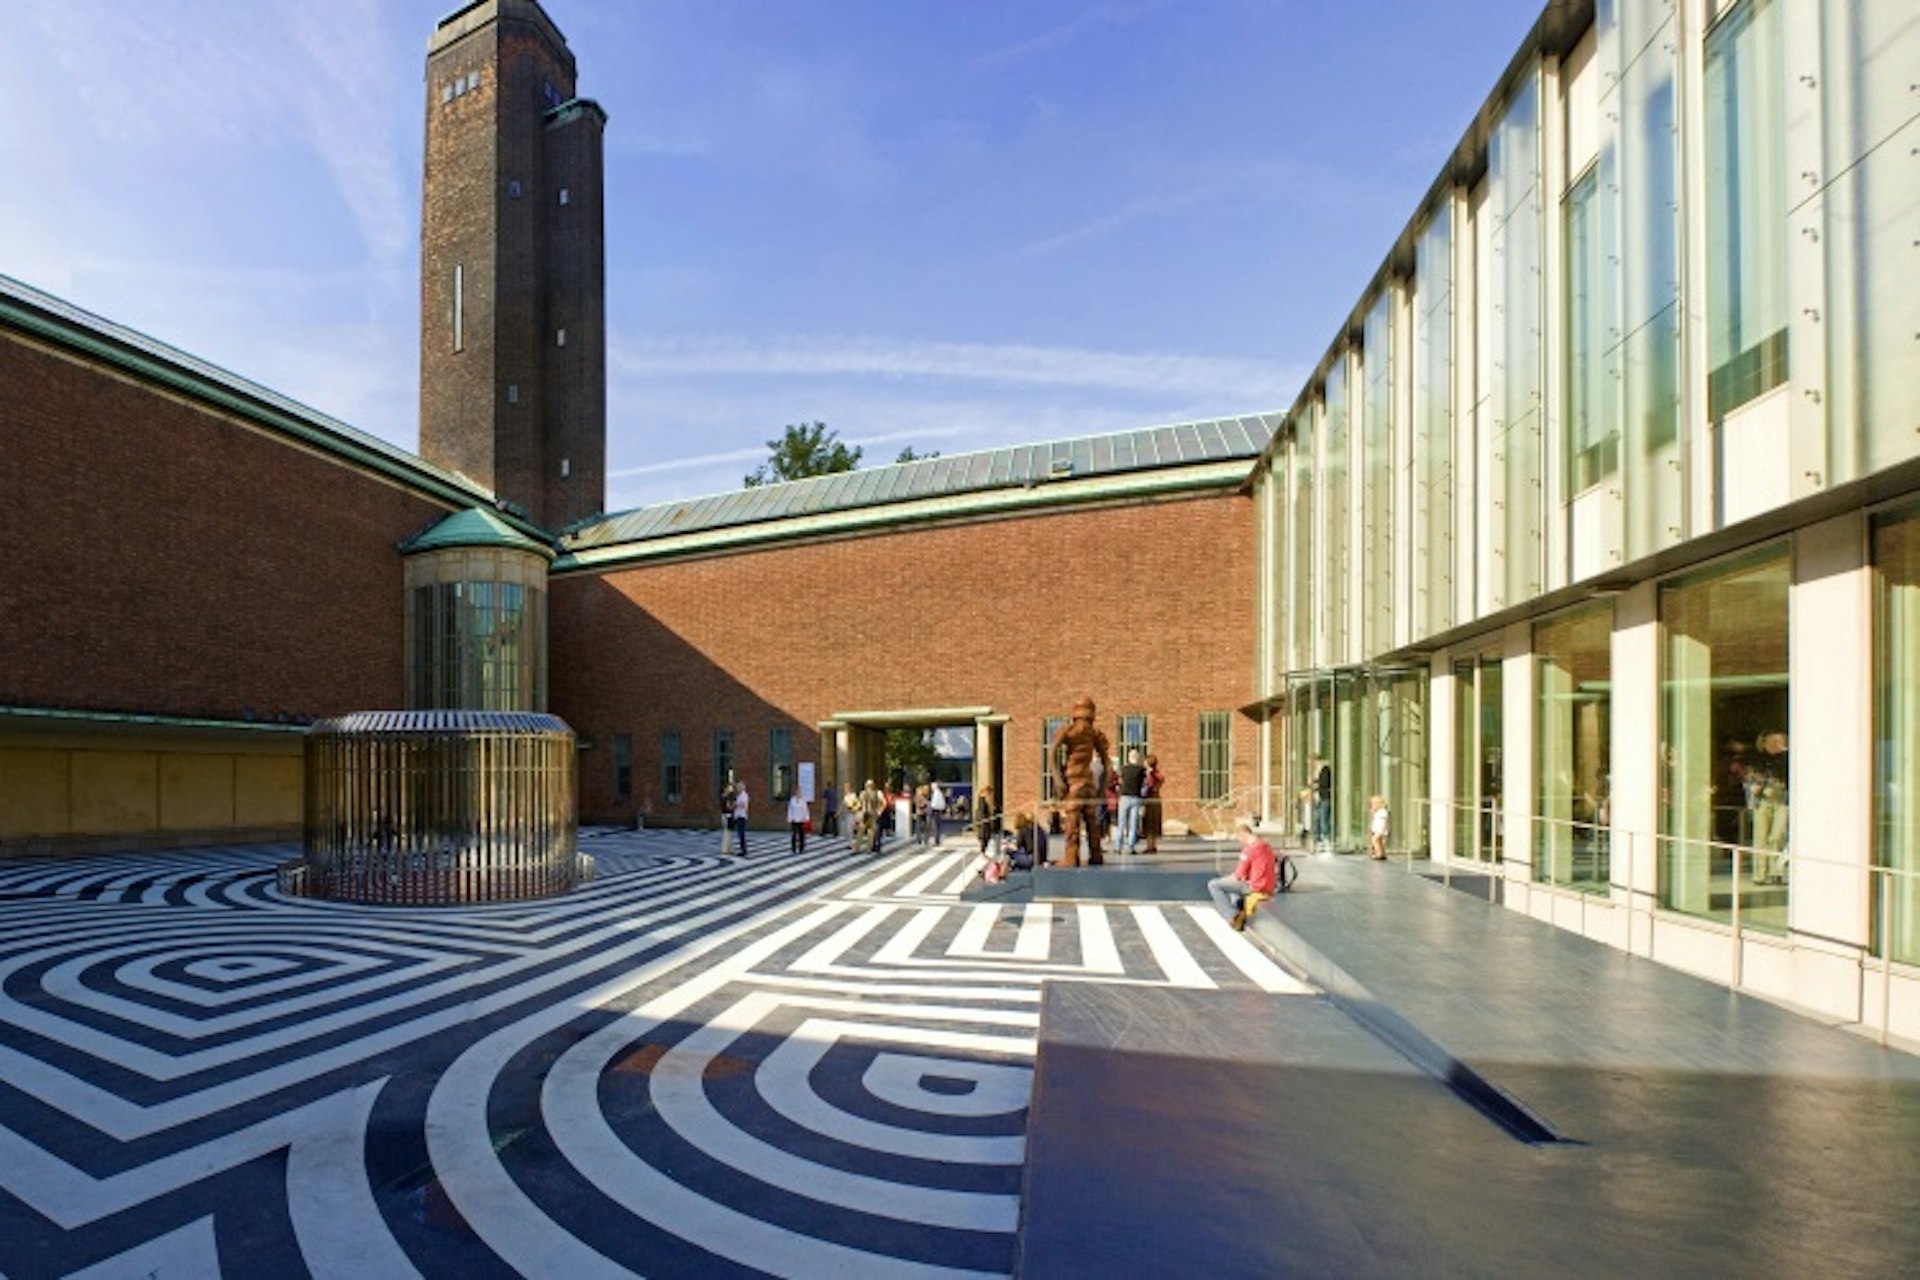 Museum van boijmans beuningen Rotterdam